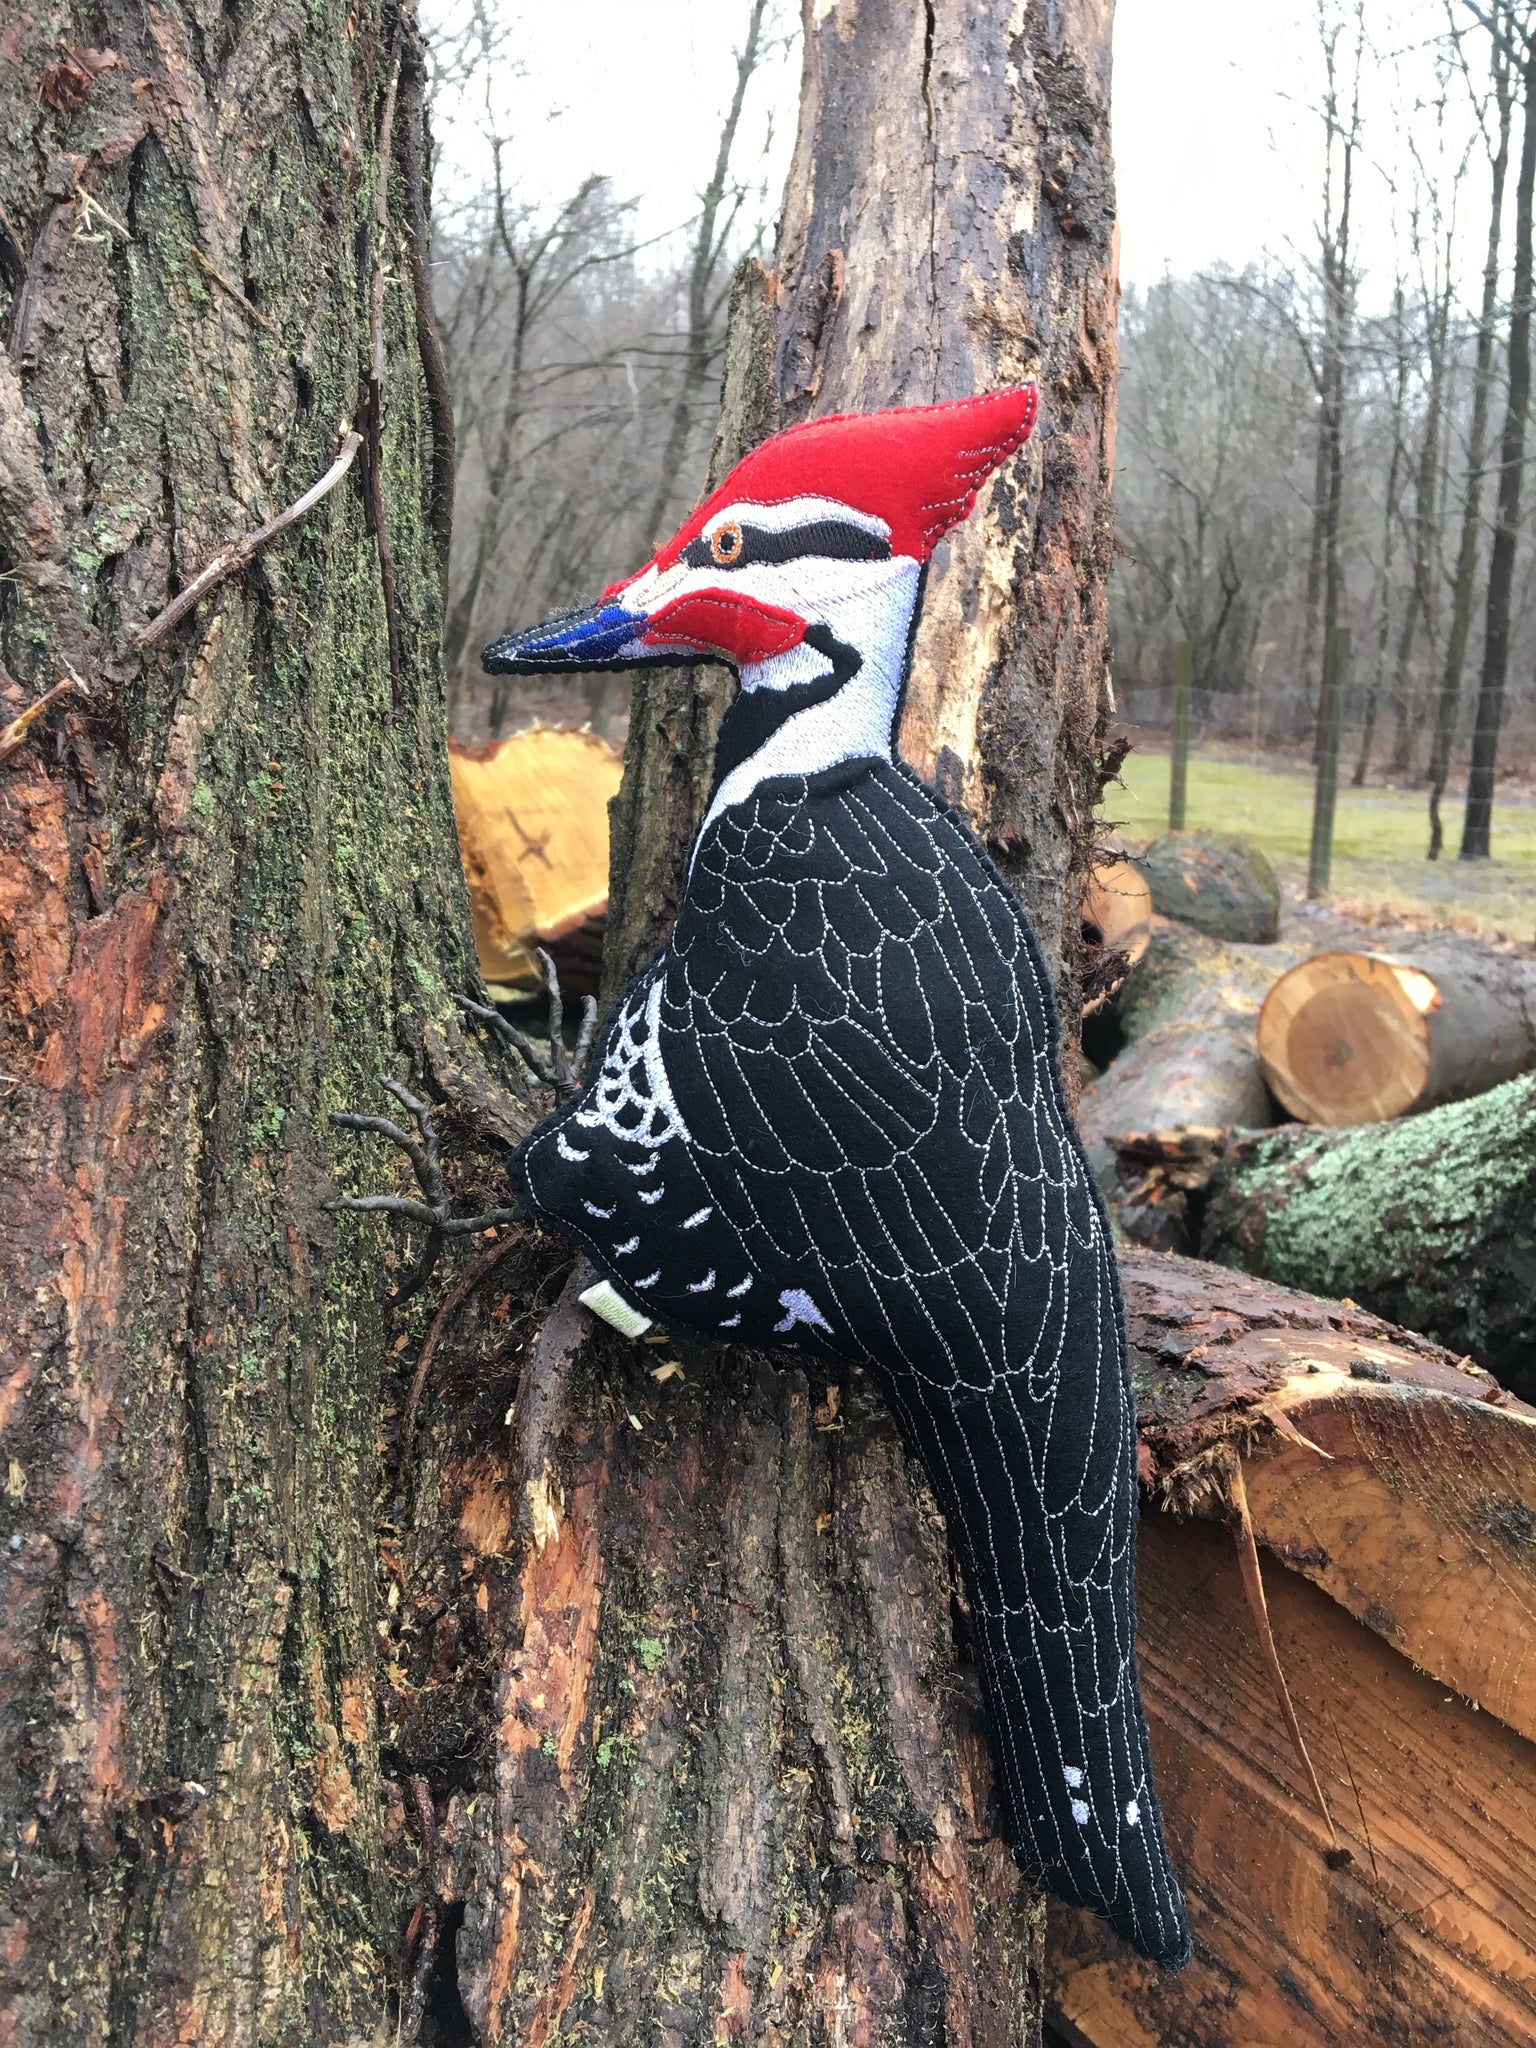 Woodpeckers LLC